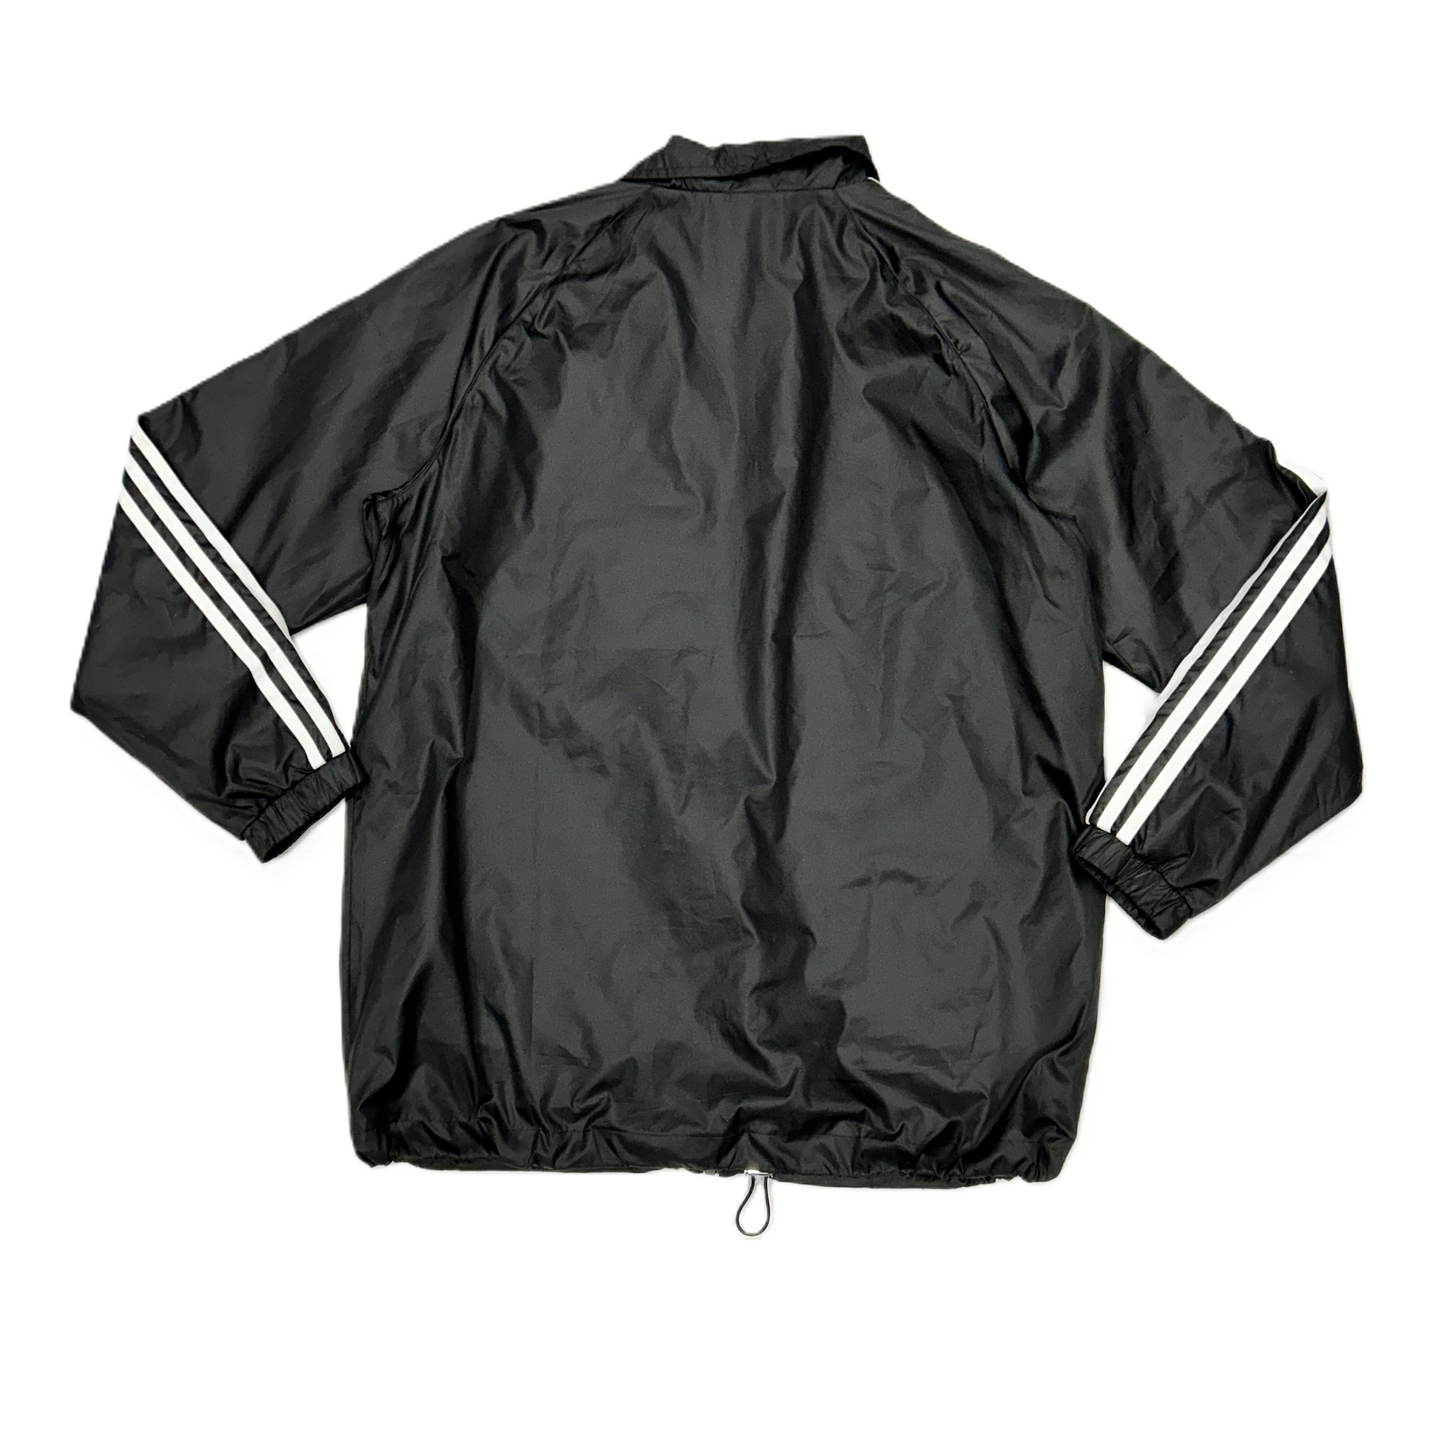 Grey Athletic Jacket By Adidas, Size: M